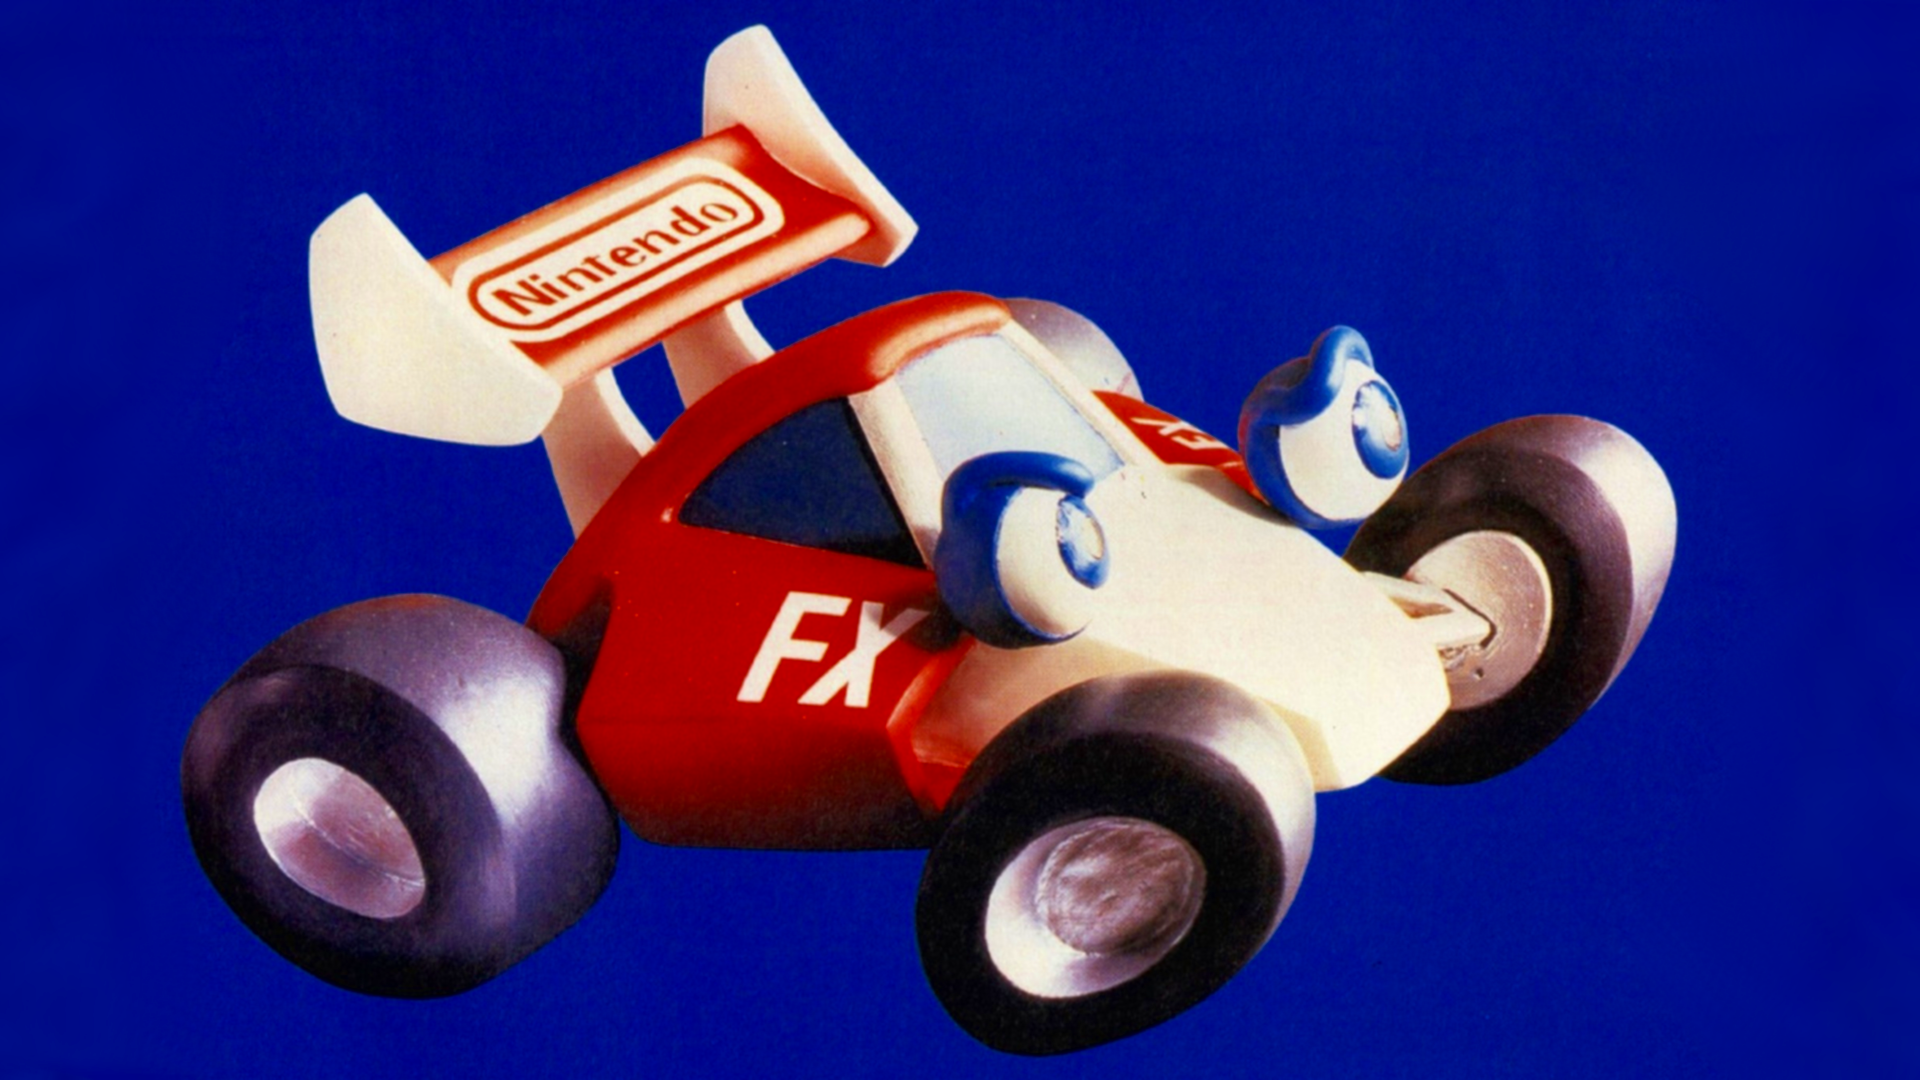 Stunt Race FX F-Type | 3D model